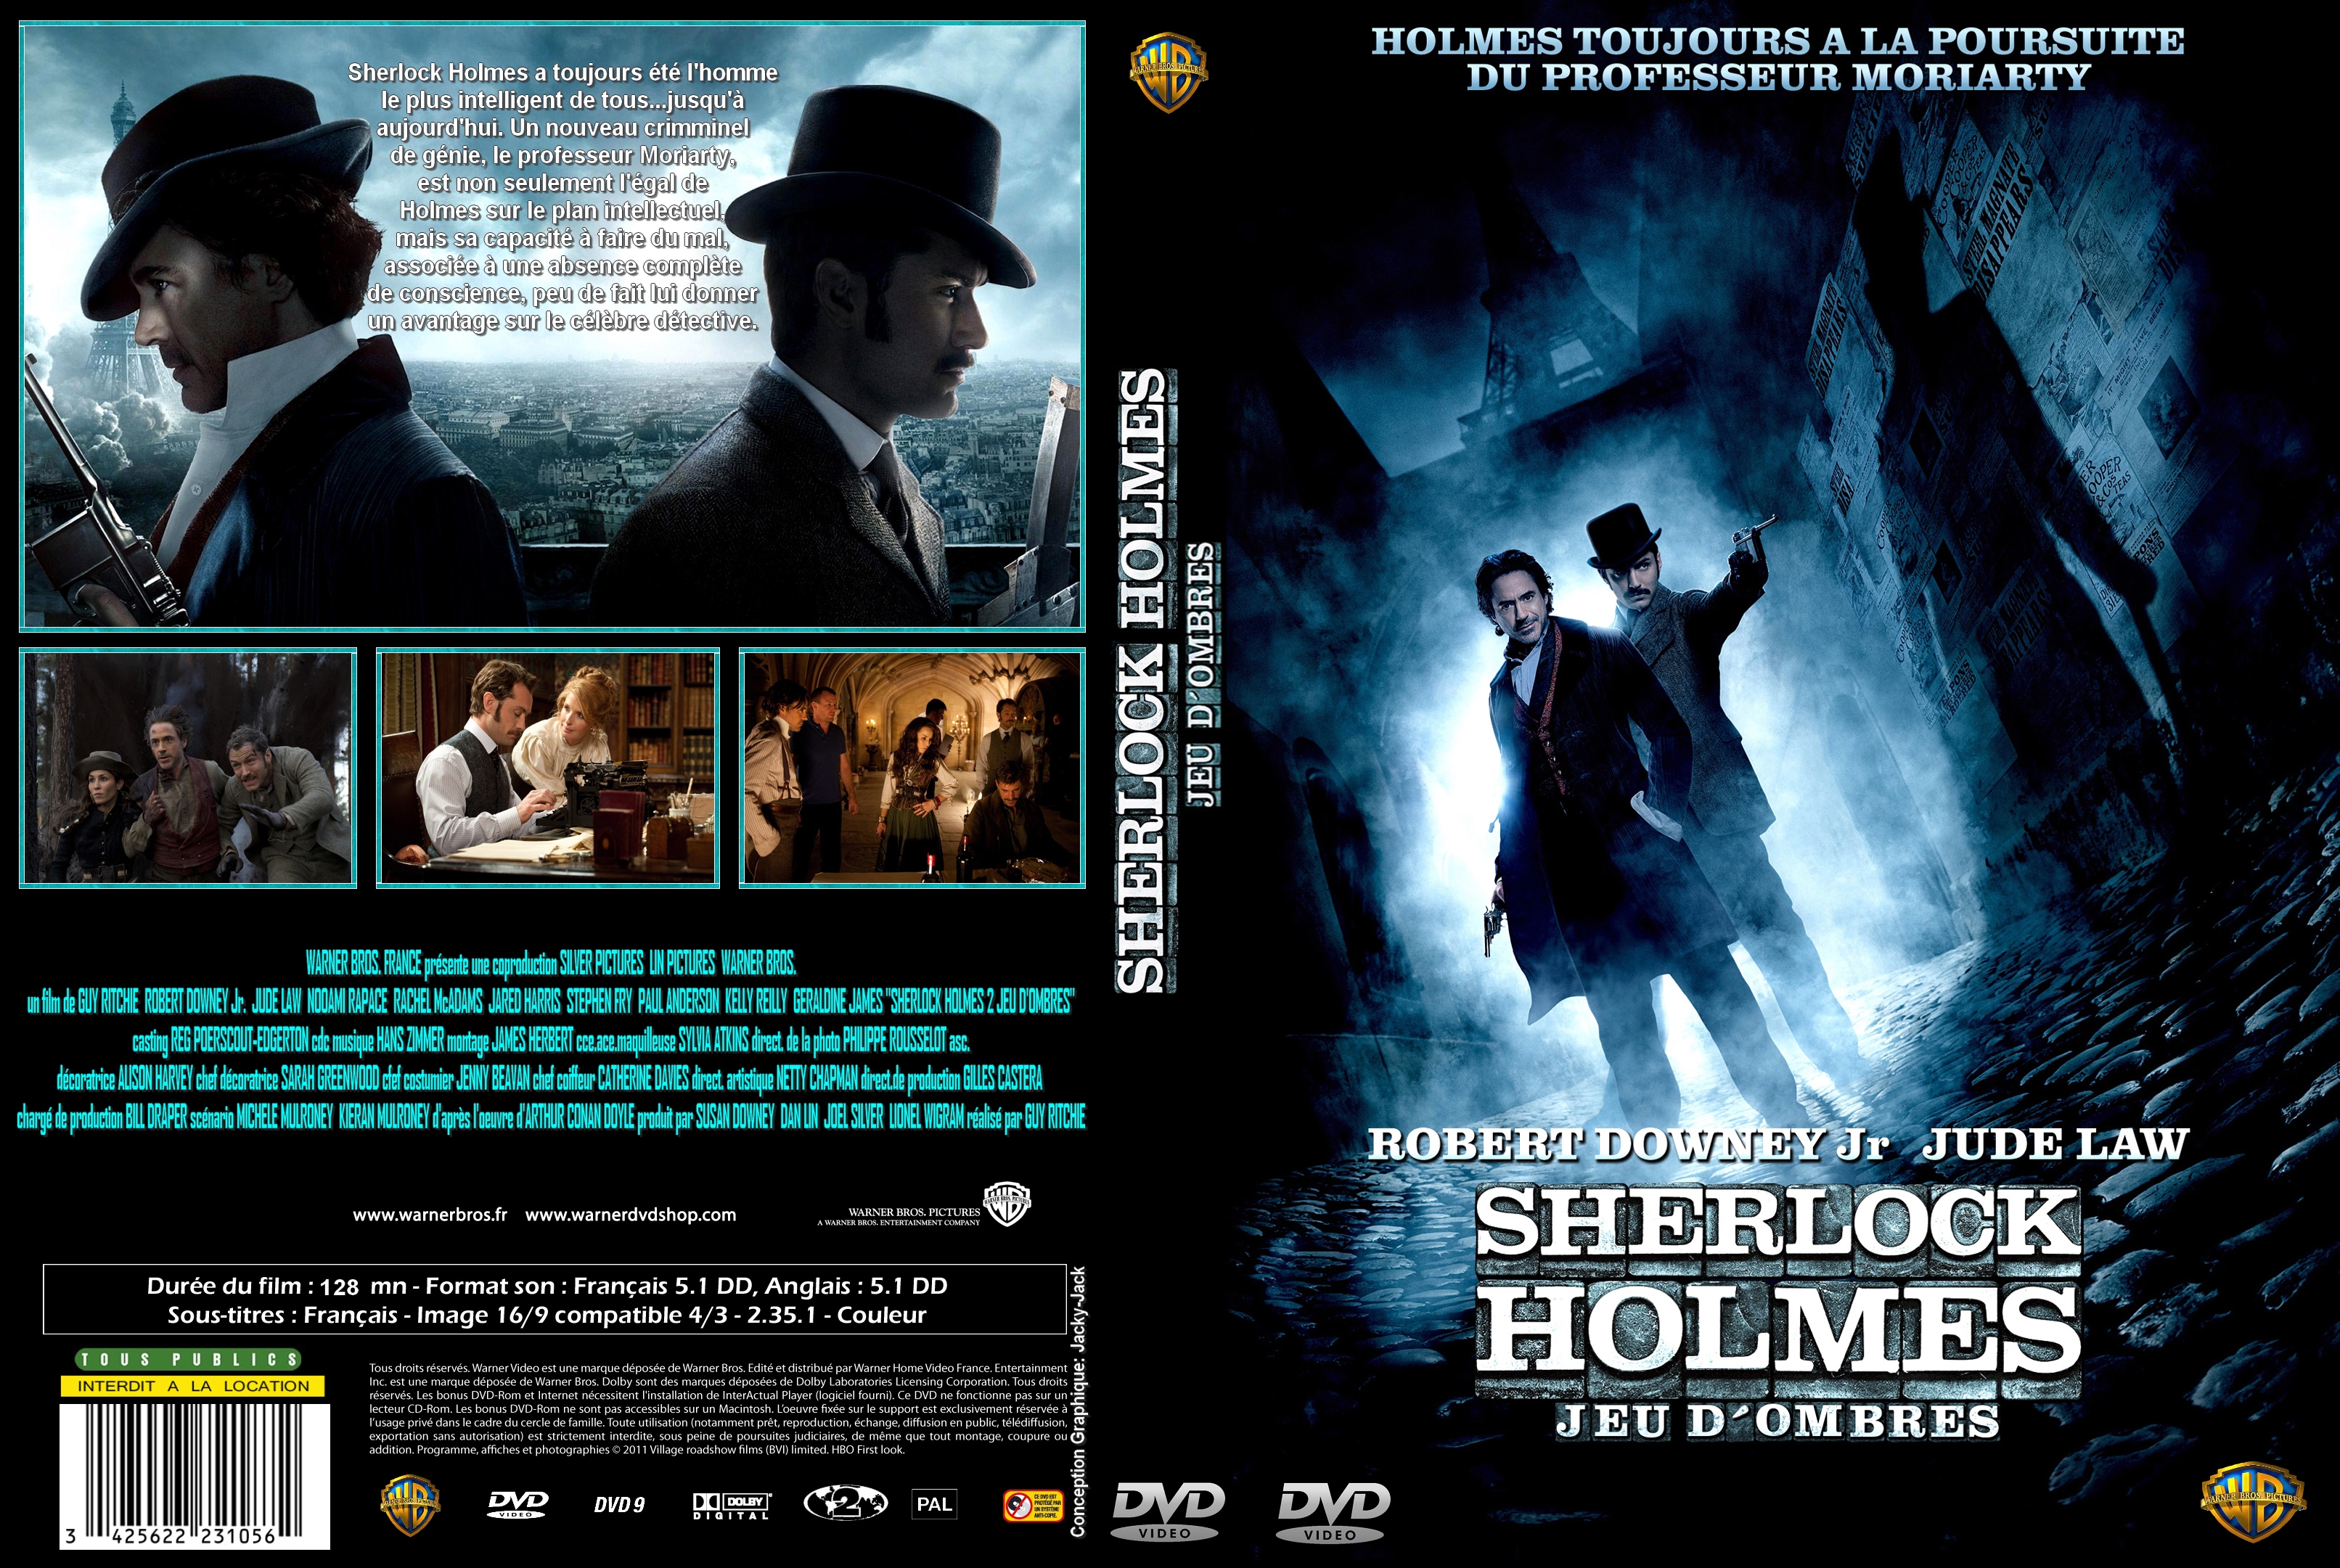 Jaquette DVD Sherlock Holmes 2 Jeu d